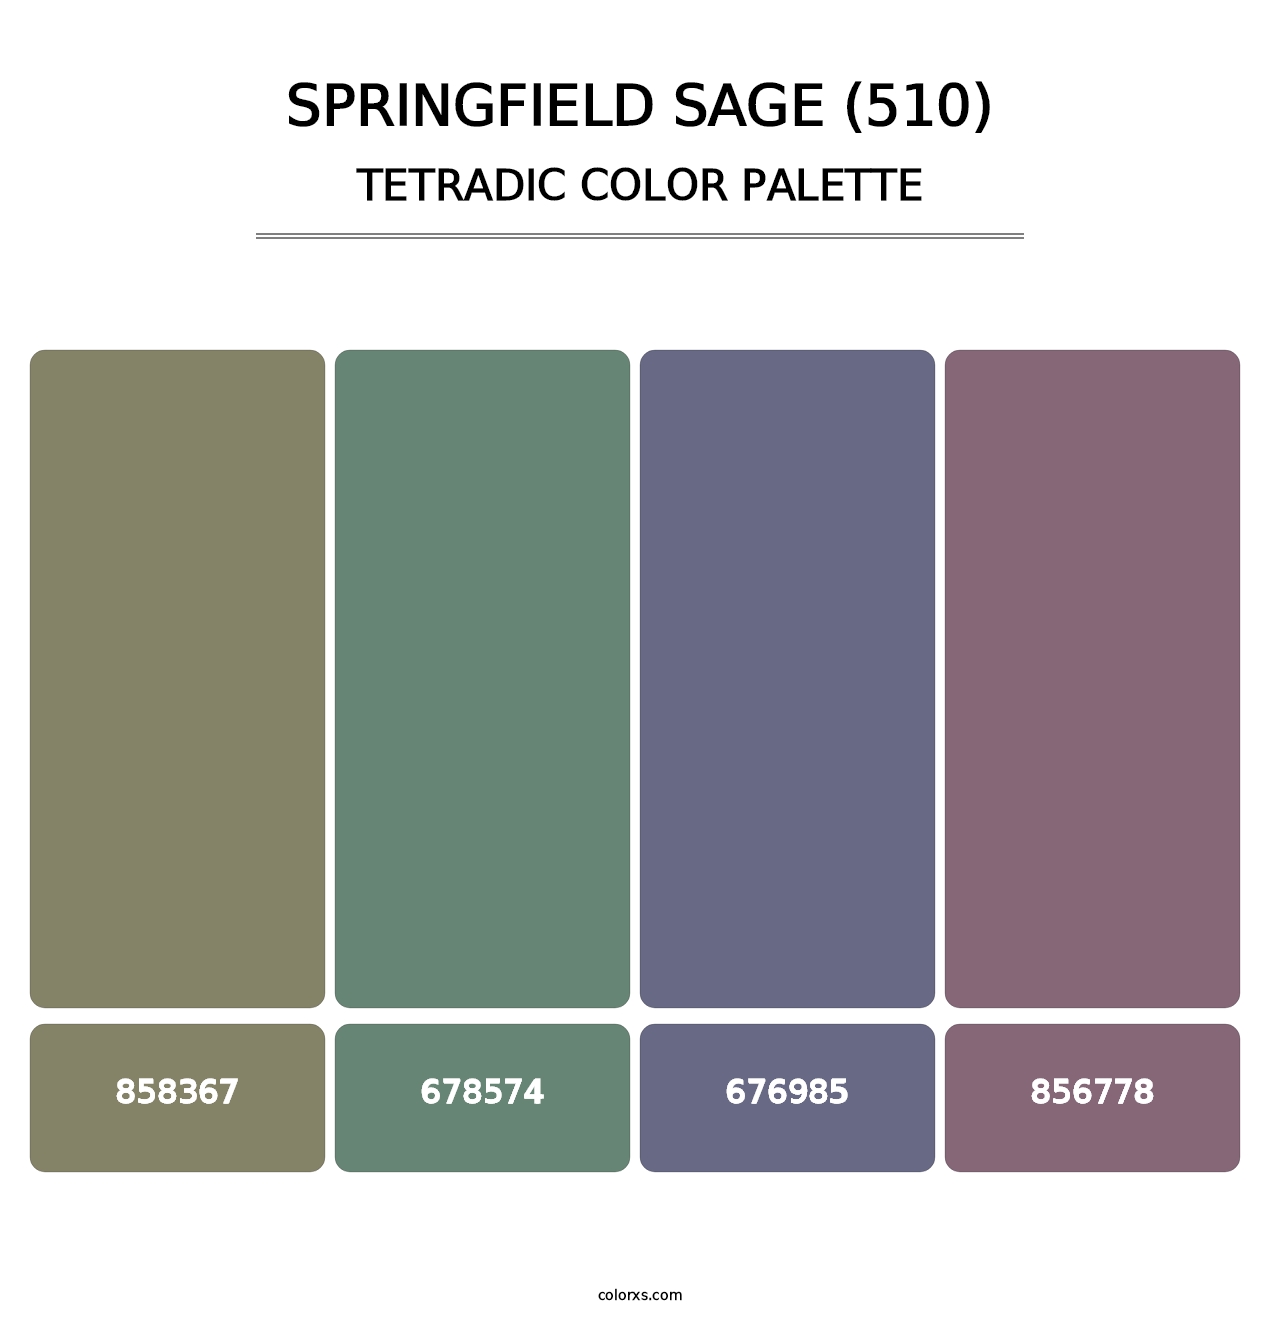 Springfield Sage (510) - Tetradic Color Palette